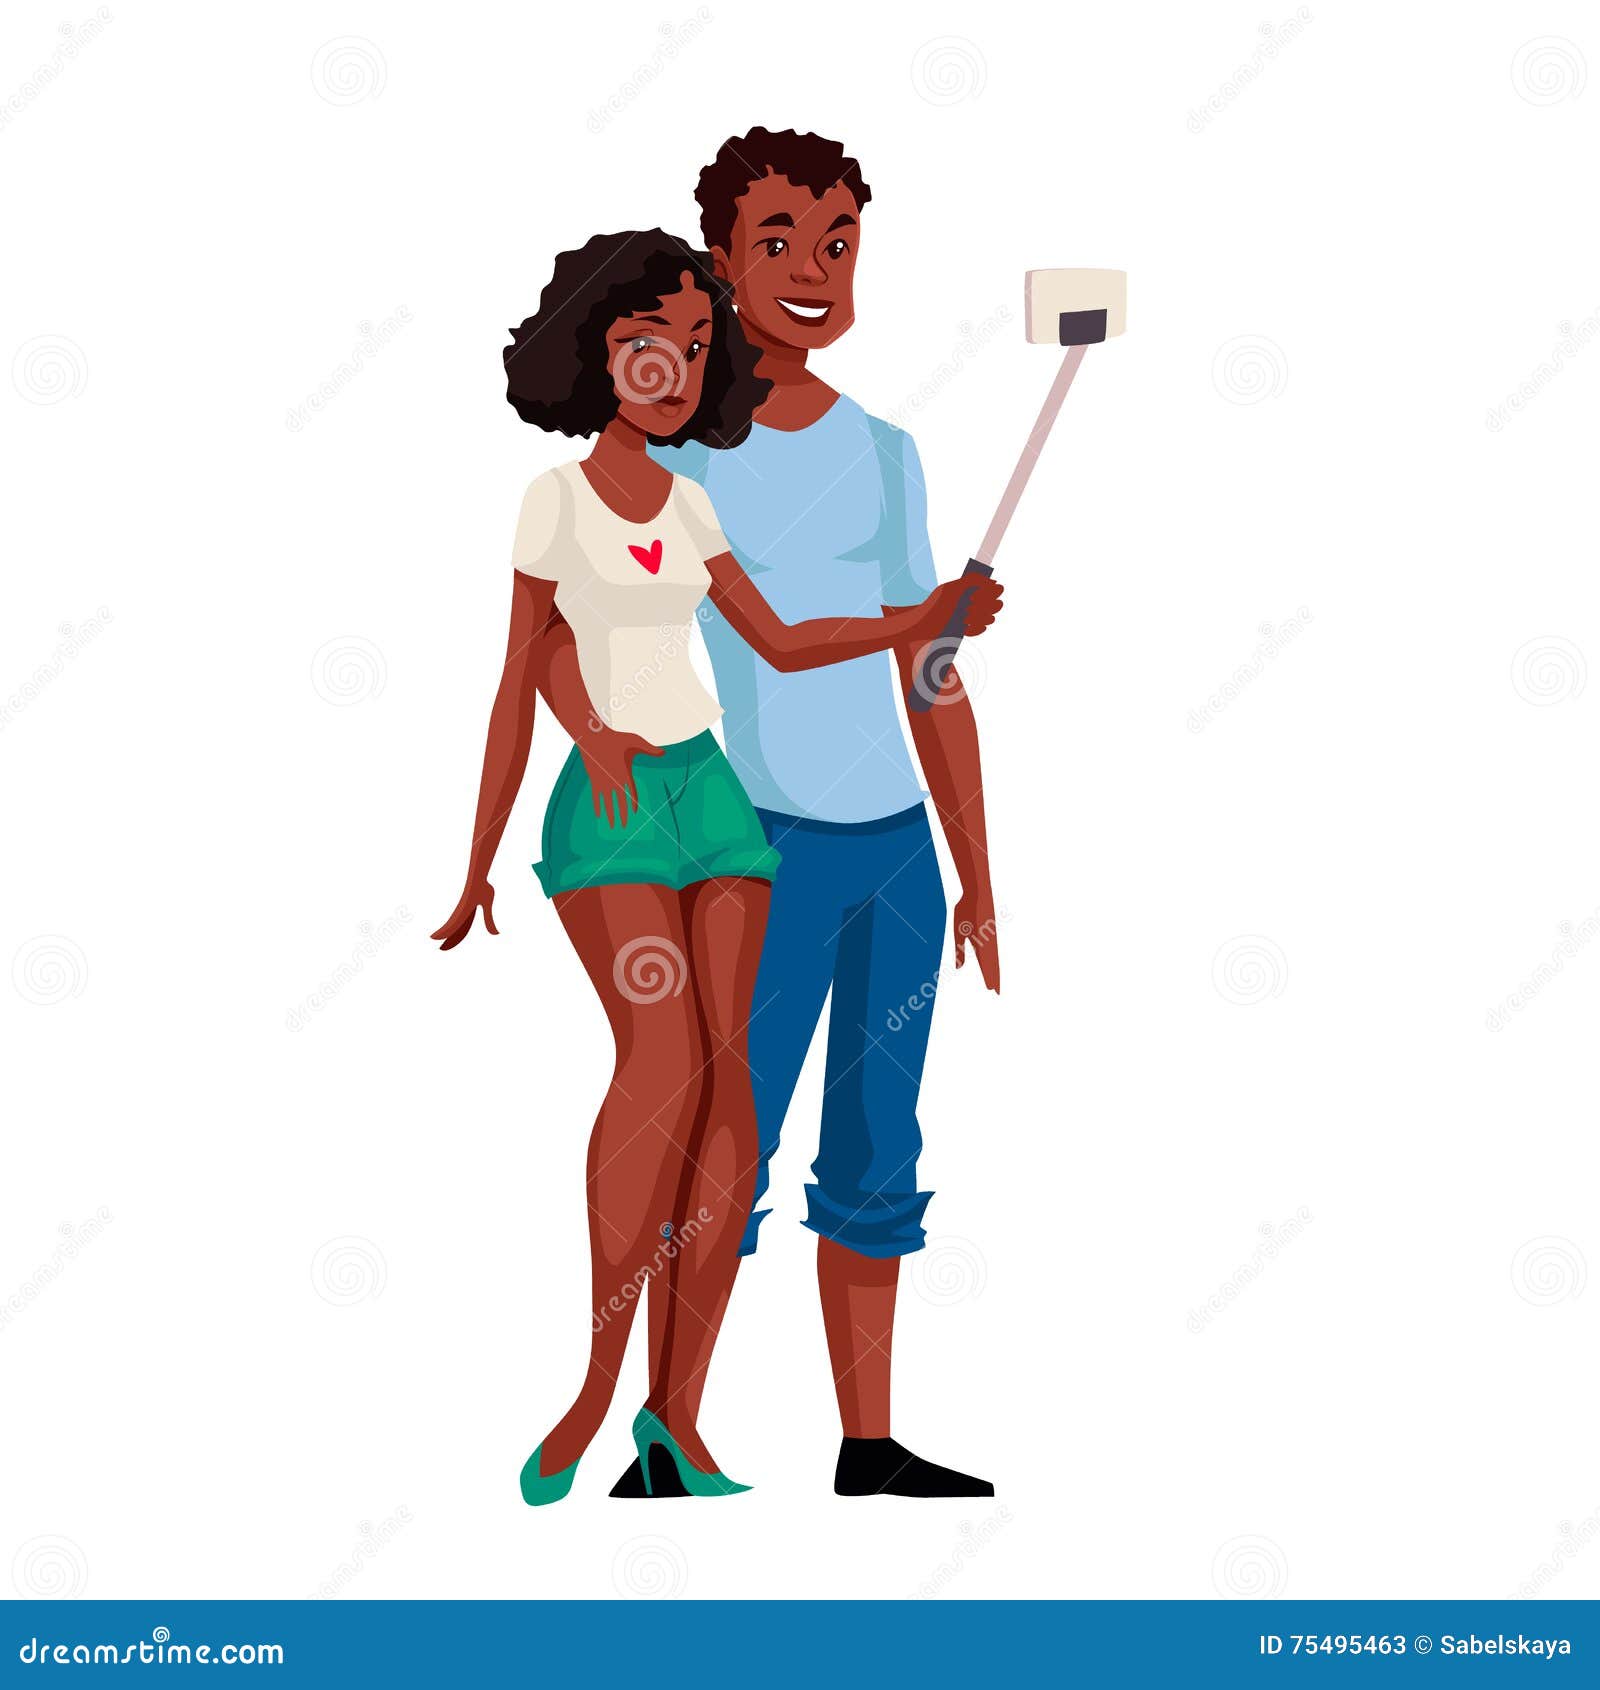 abraham santos share black couples cartoon photos